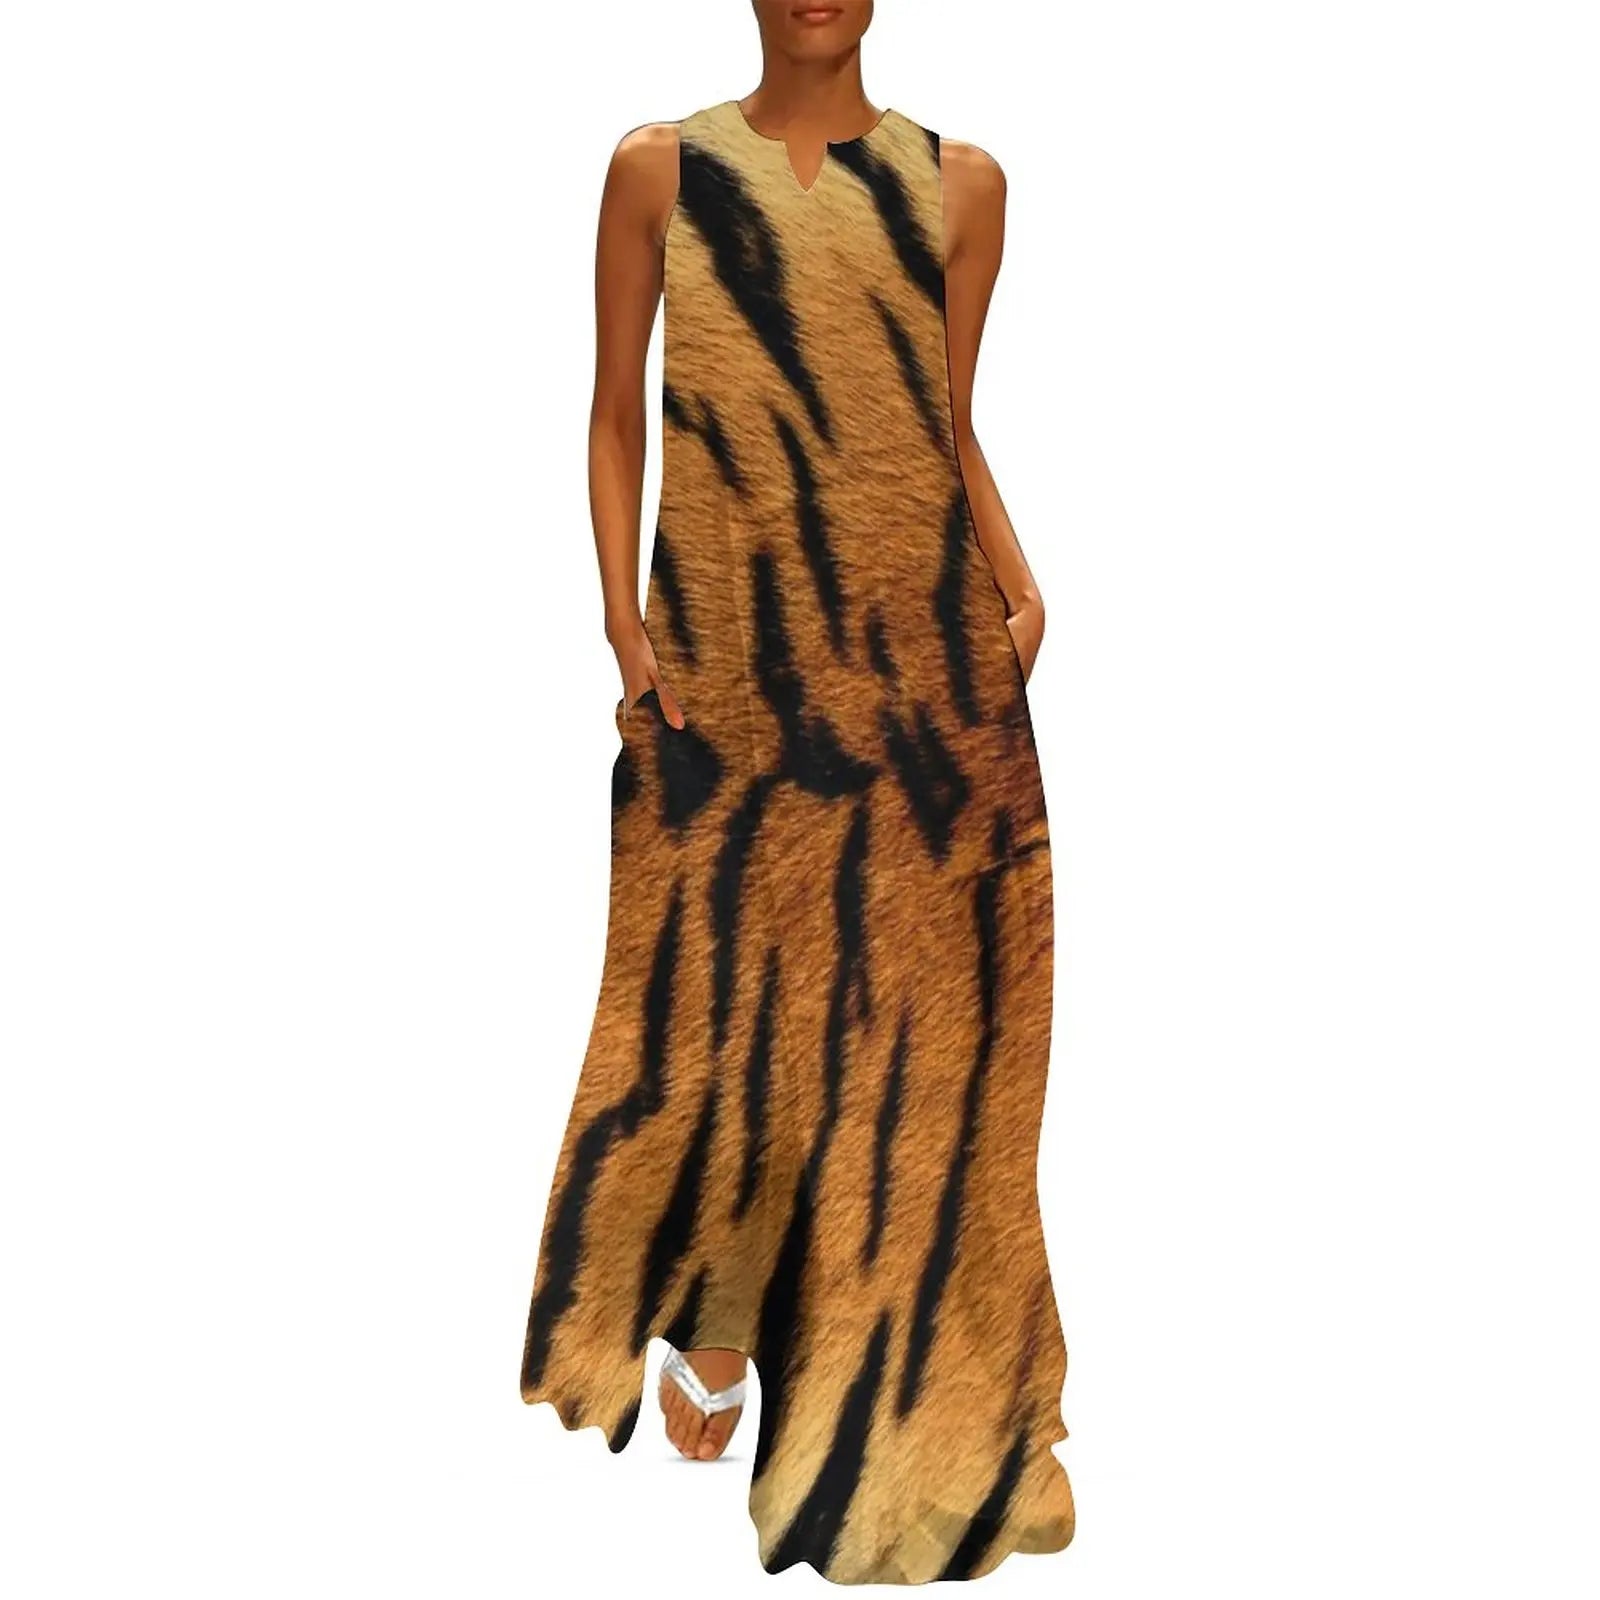 New Arrival Gorgeous Classy Luxury Women's Leopard Fashion Dress